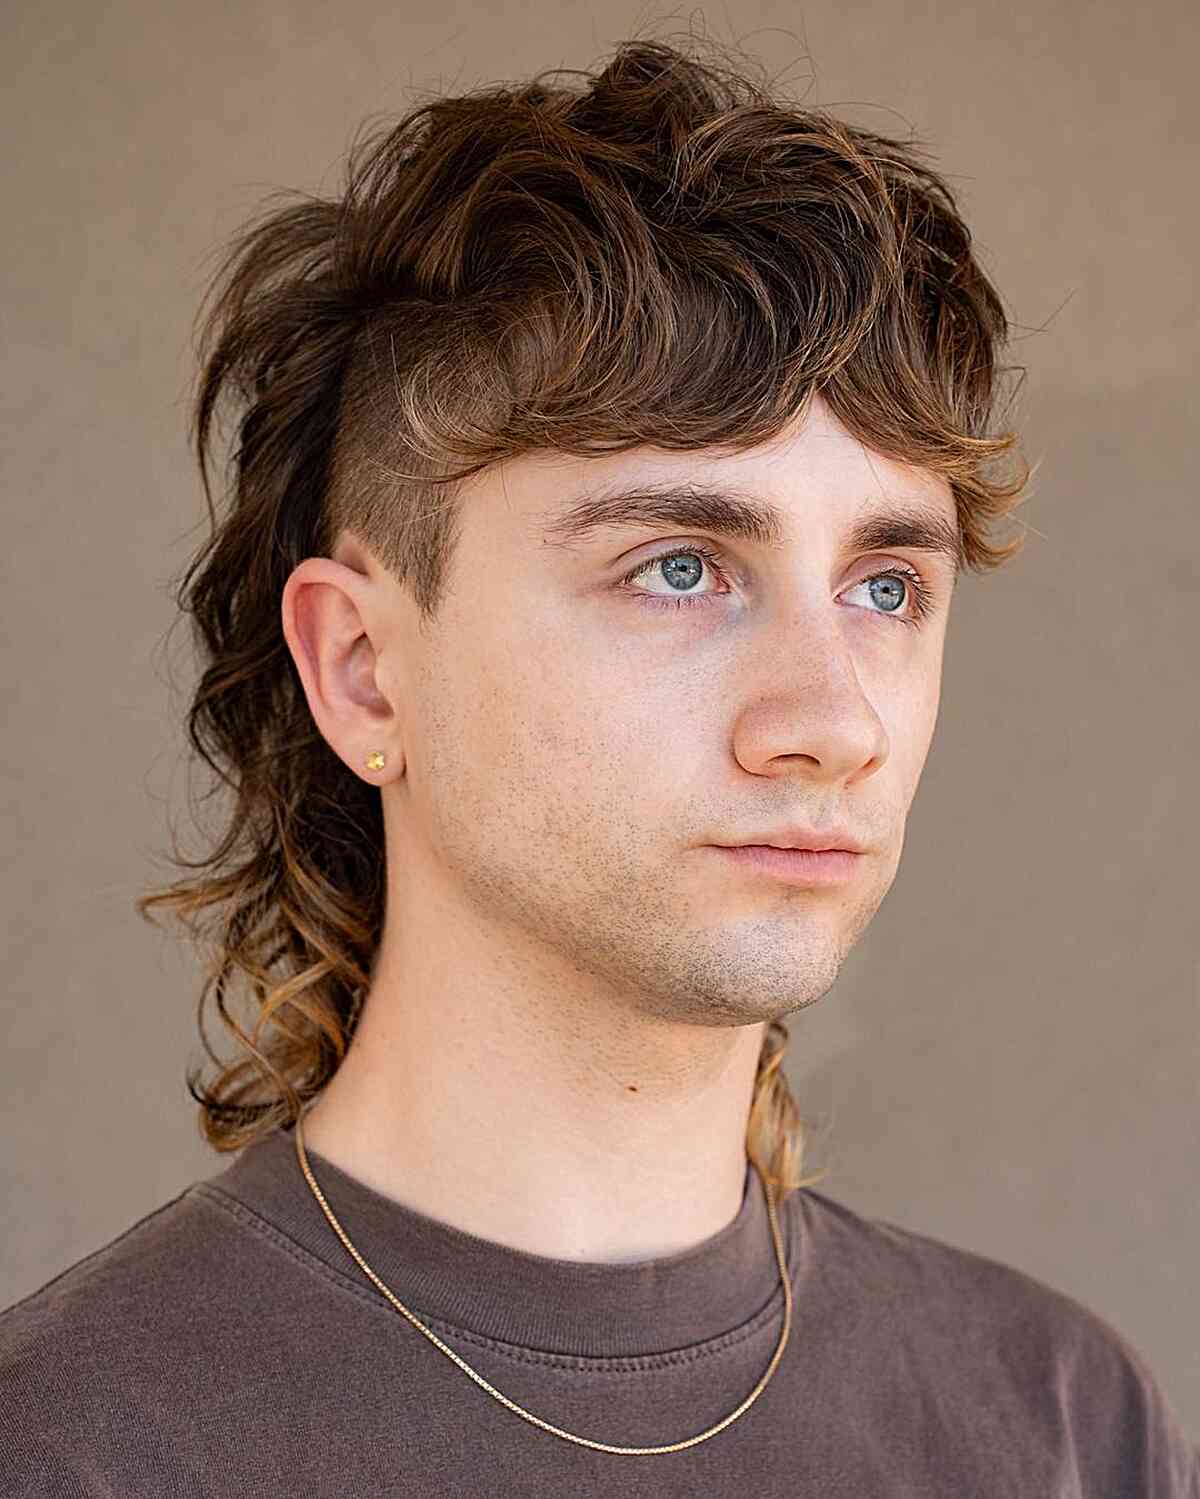 Edgy Mullet Haircut for Guys with Medium-Length Hair